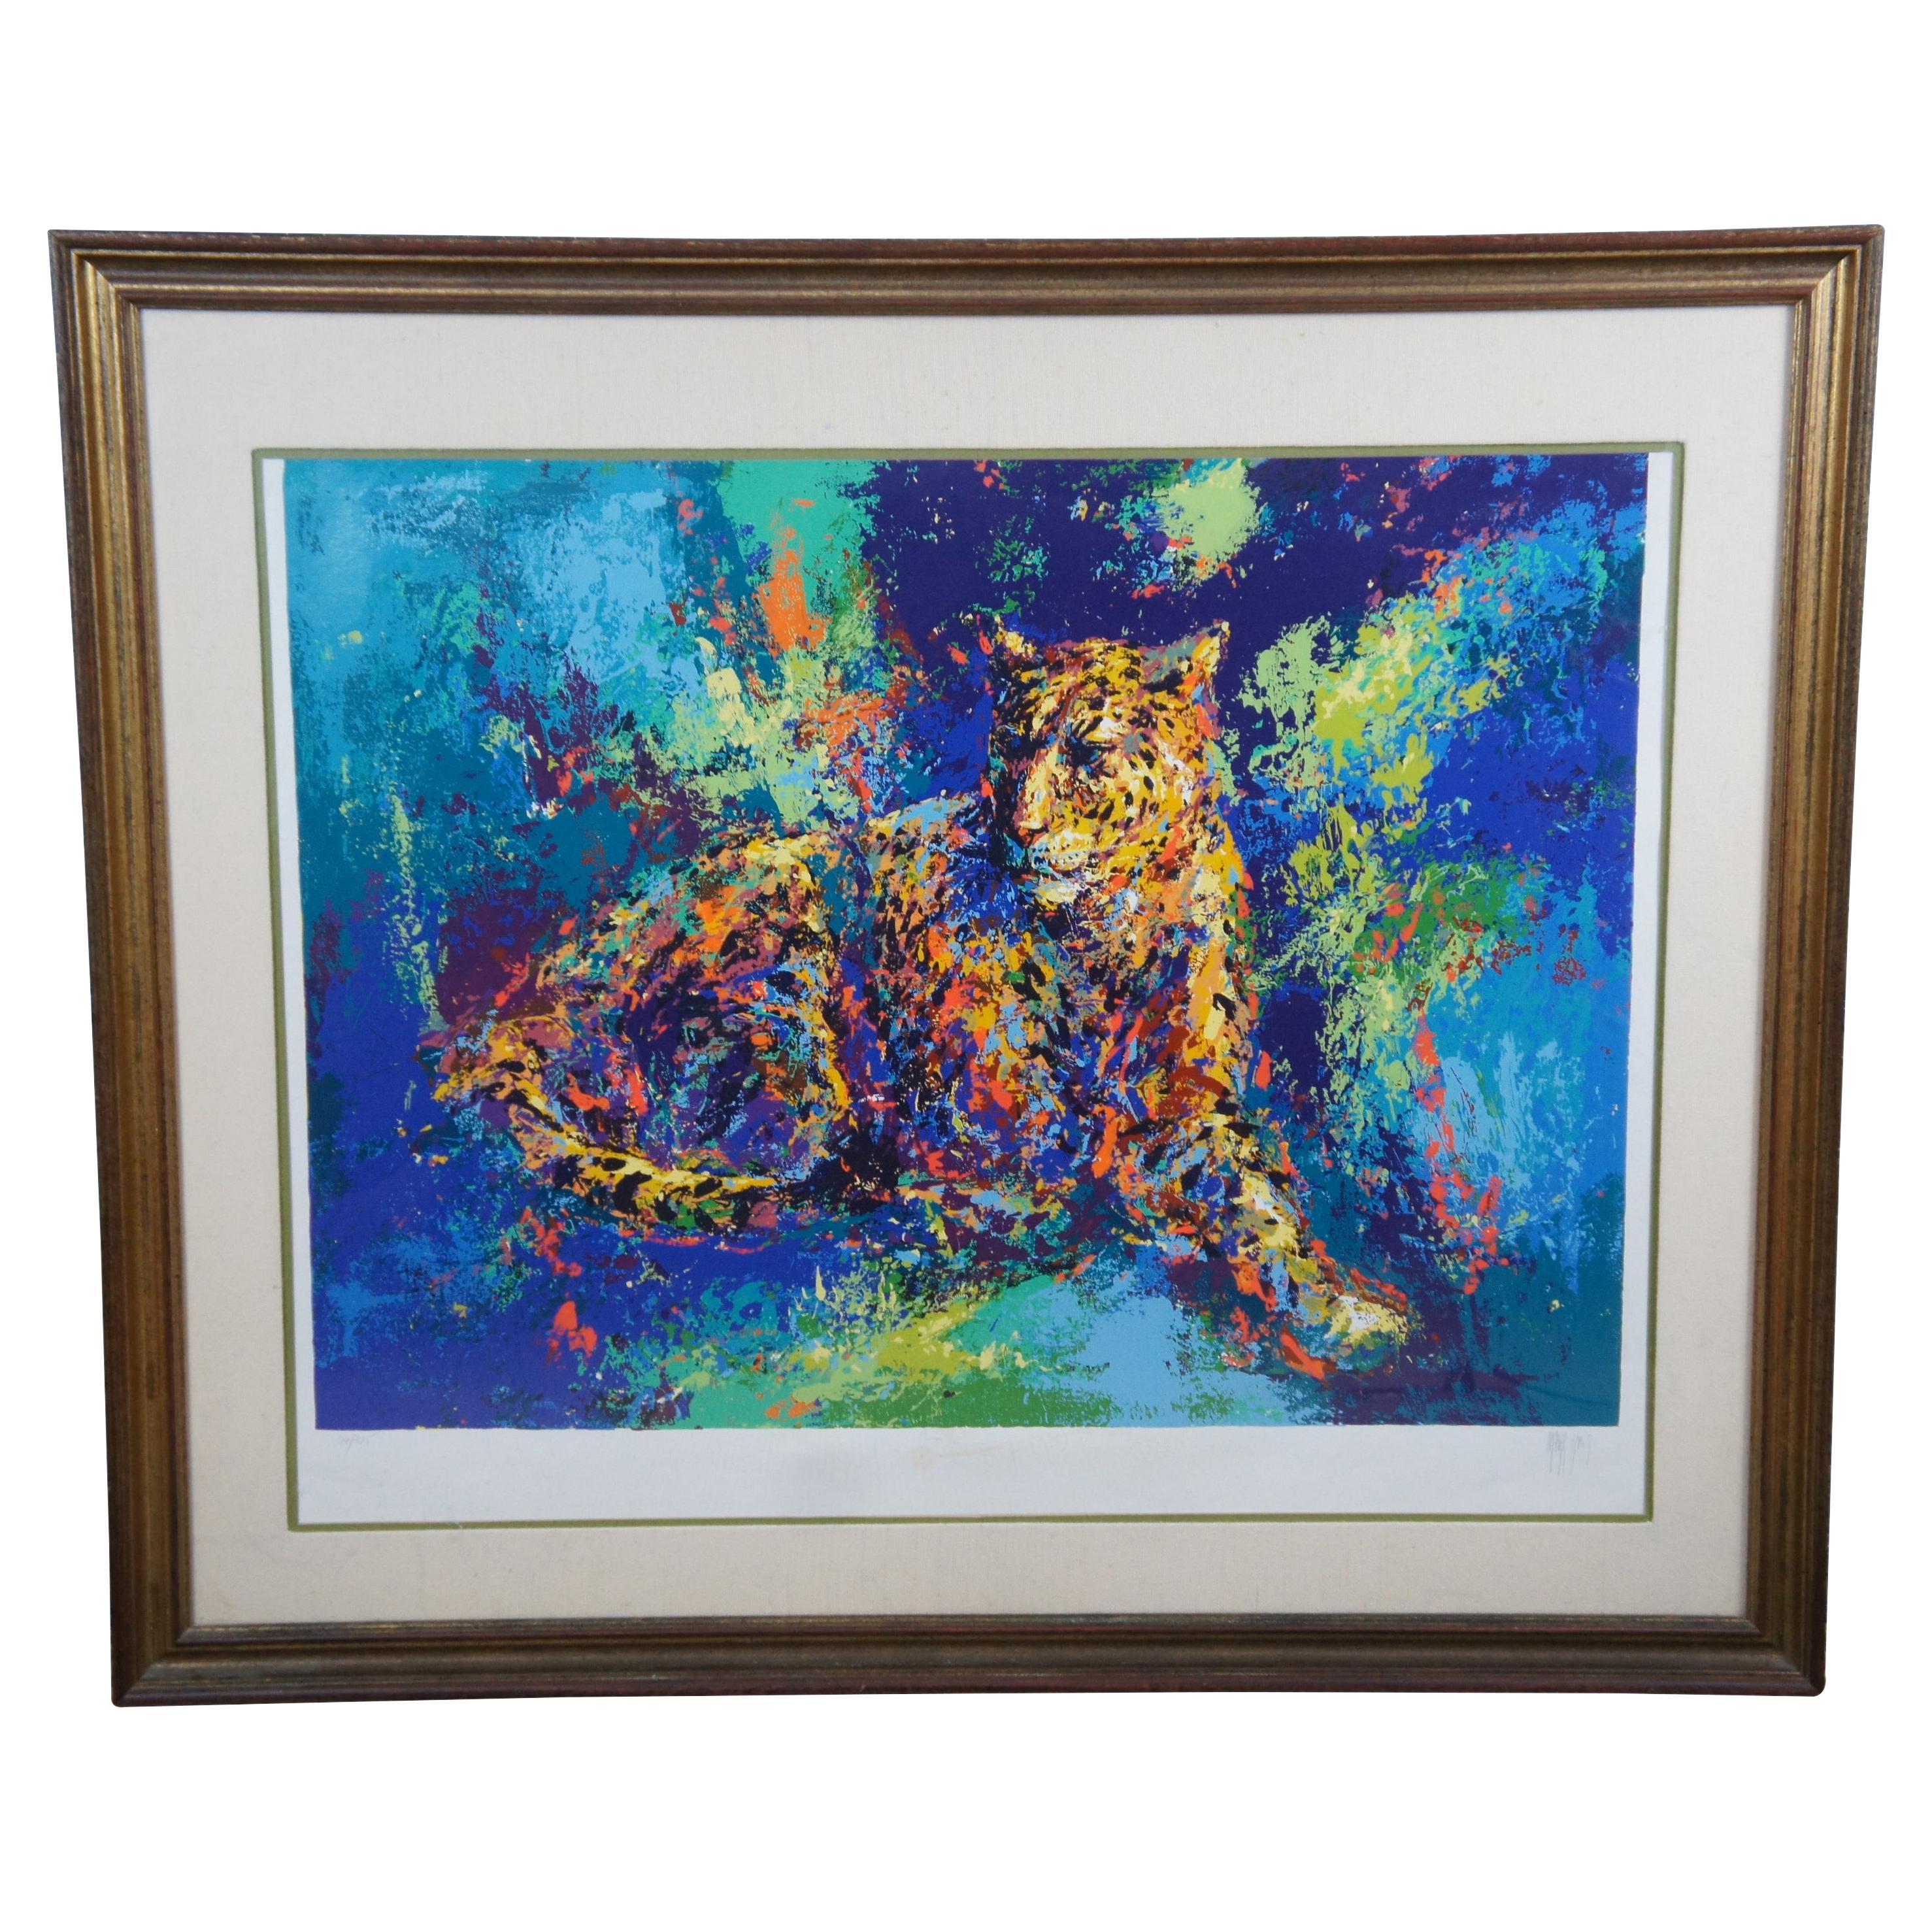 Mark King "Leopard" Expressionist Pencil Signed Limited Edition Serigraph Framed For Sale